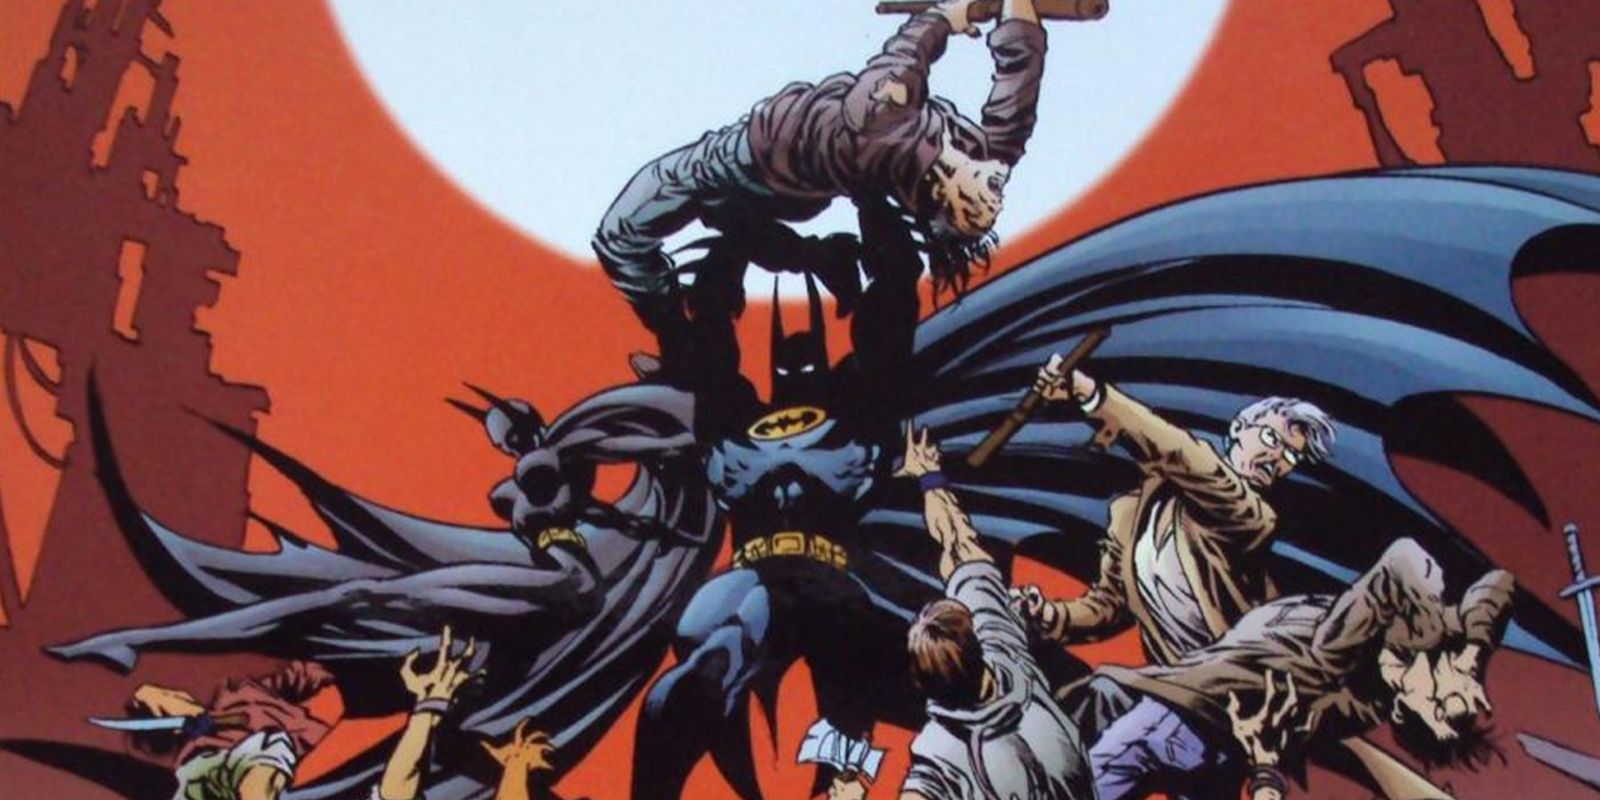 Batman, Batgirl, and Jim Gordon fighting gangs in Batman No Man's Land